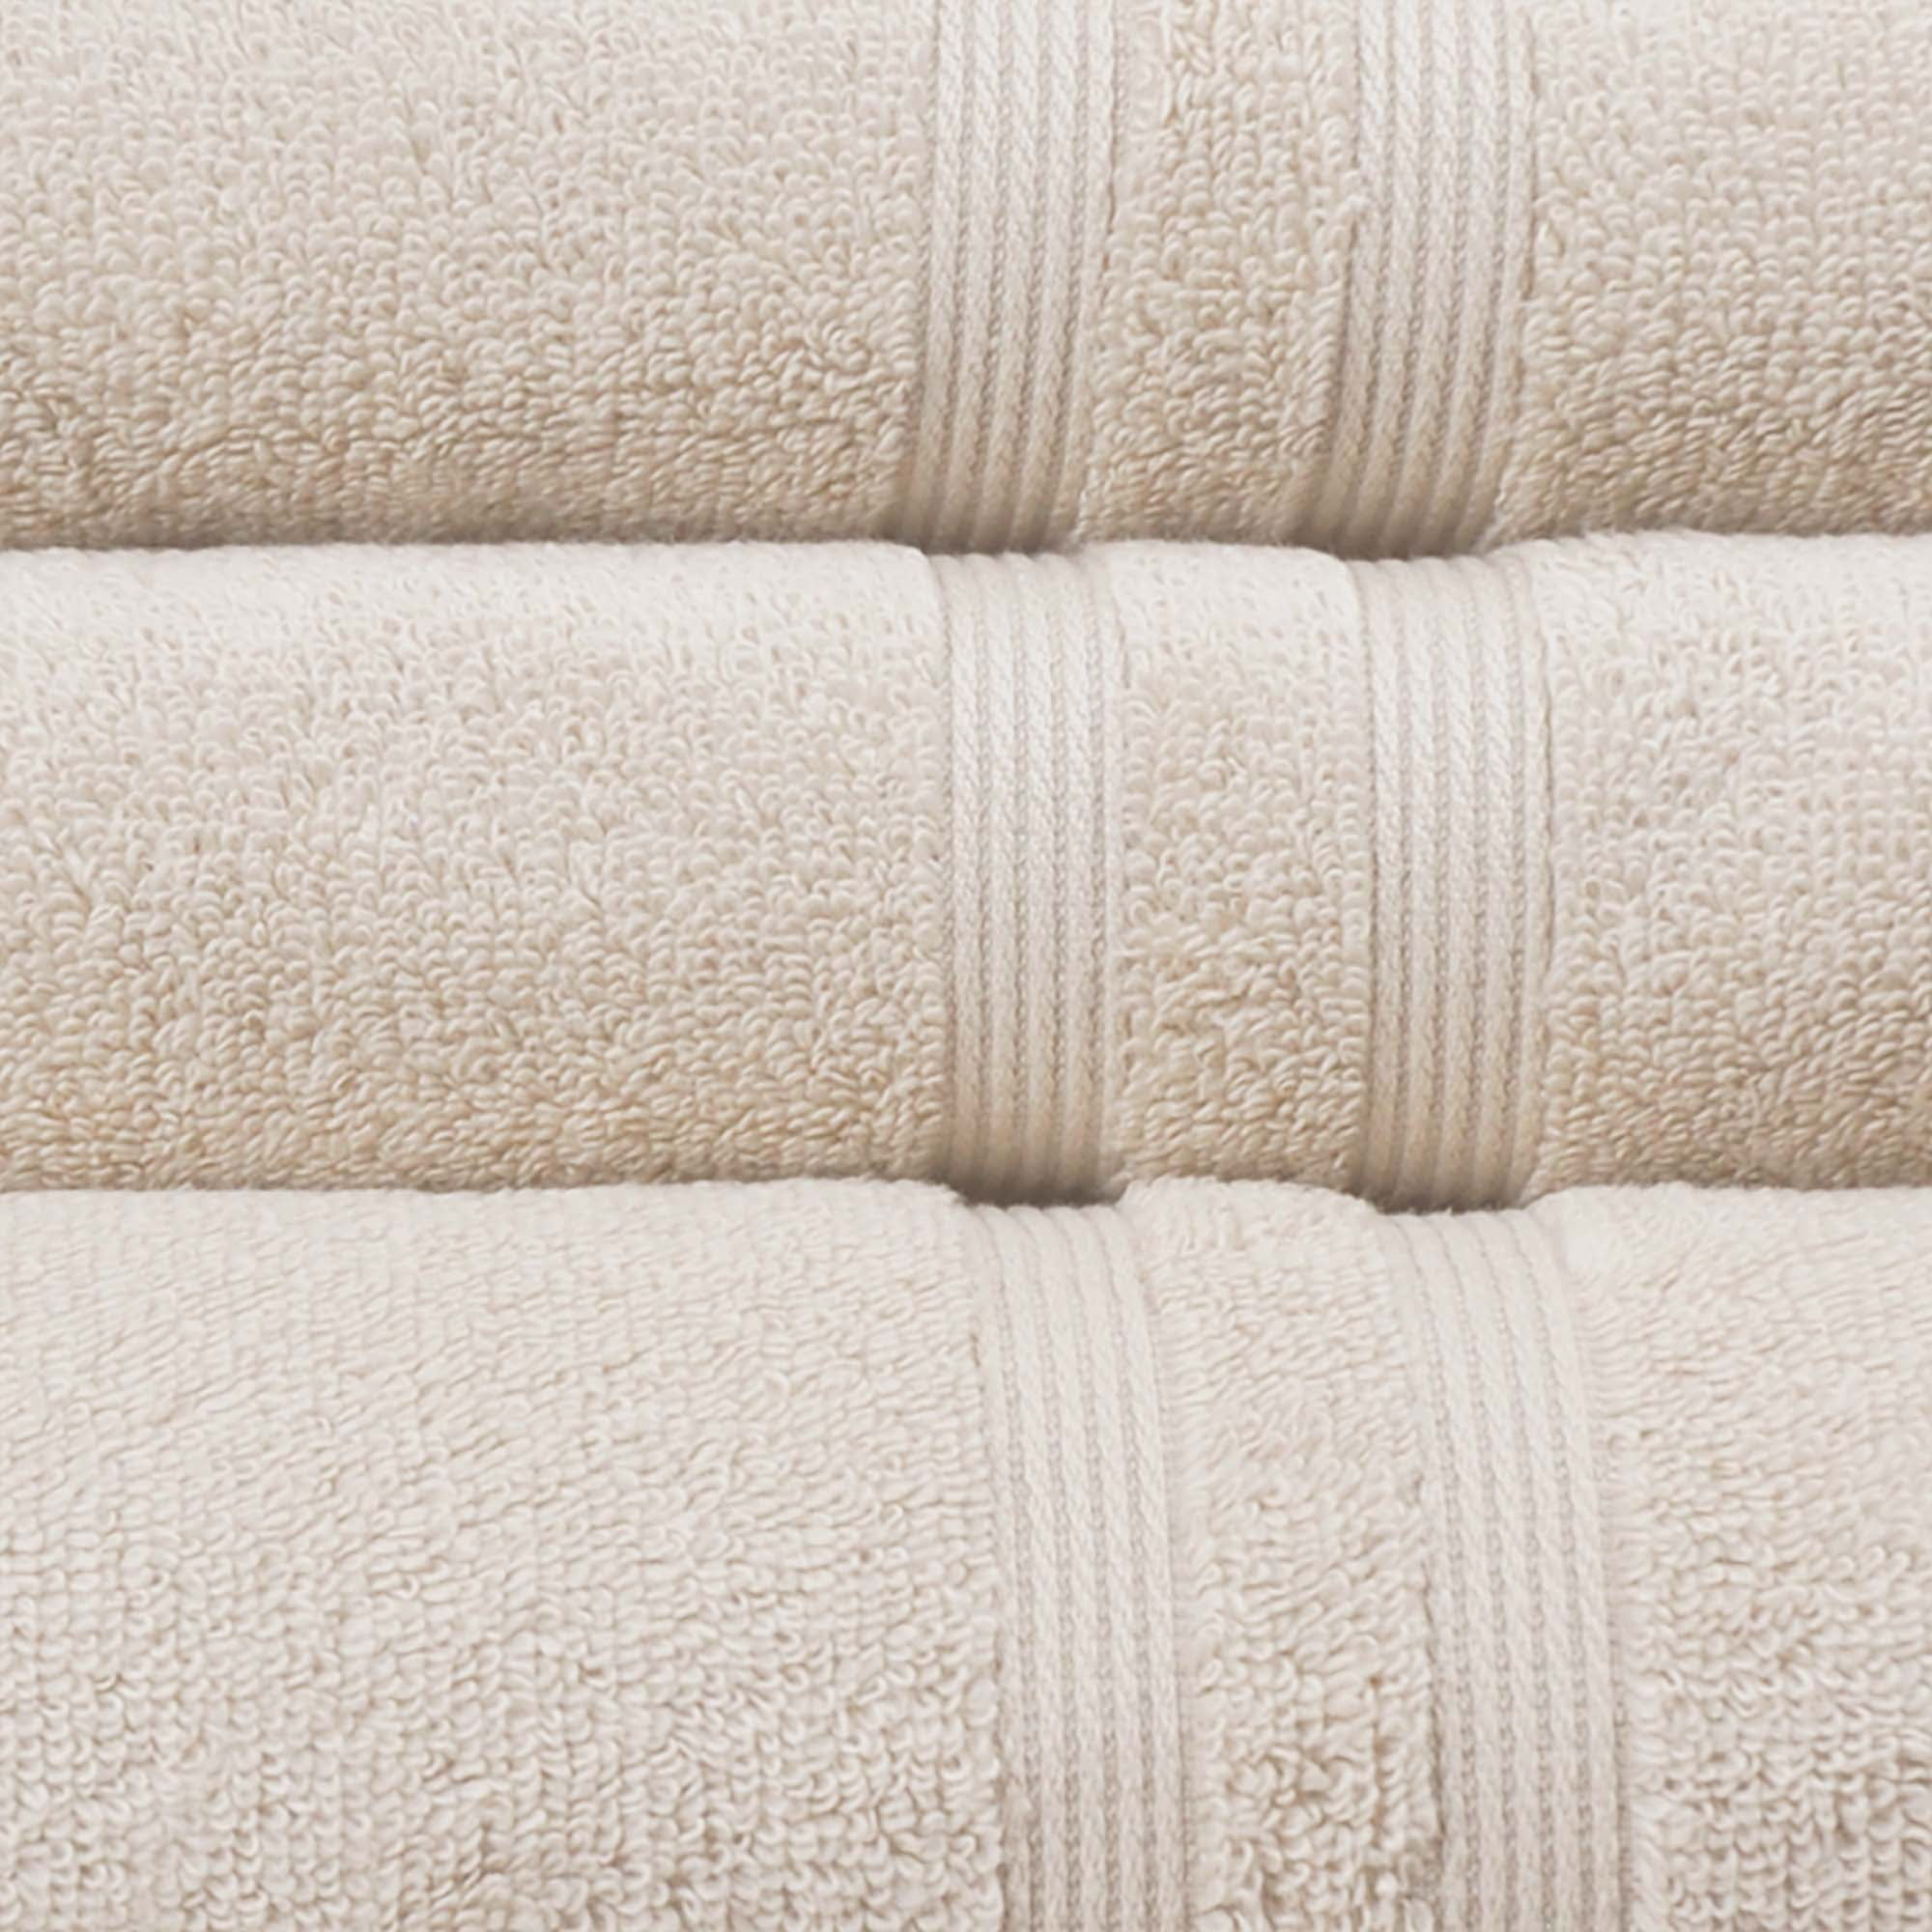 Buy Maspar Embroidery Beige Cotton Bath Towel Towels - Set of 6 at